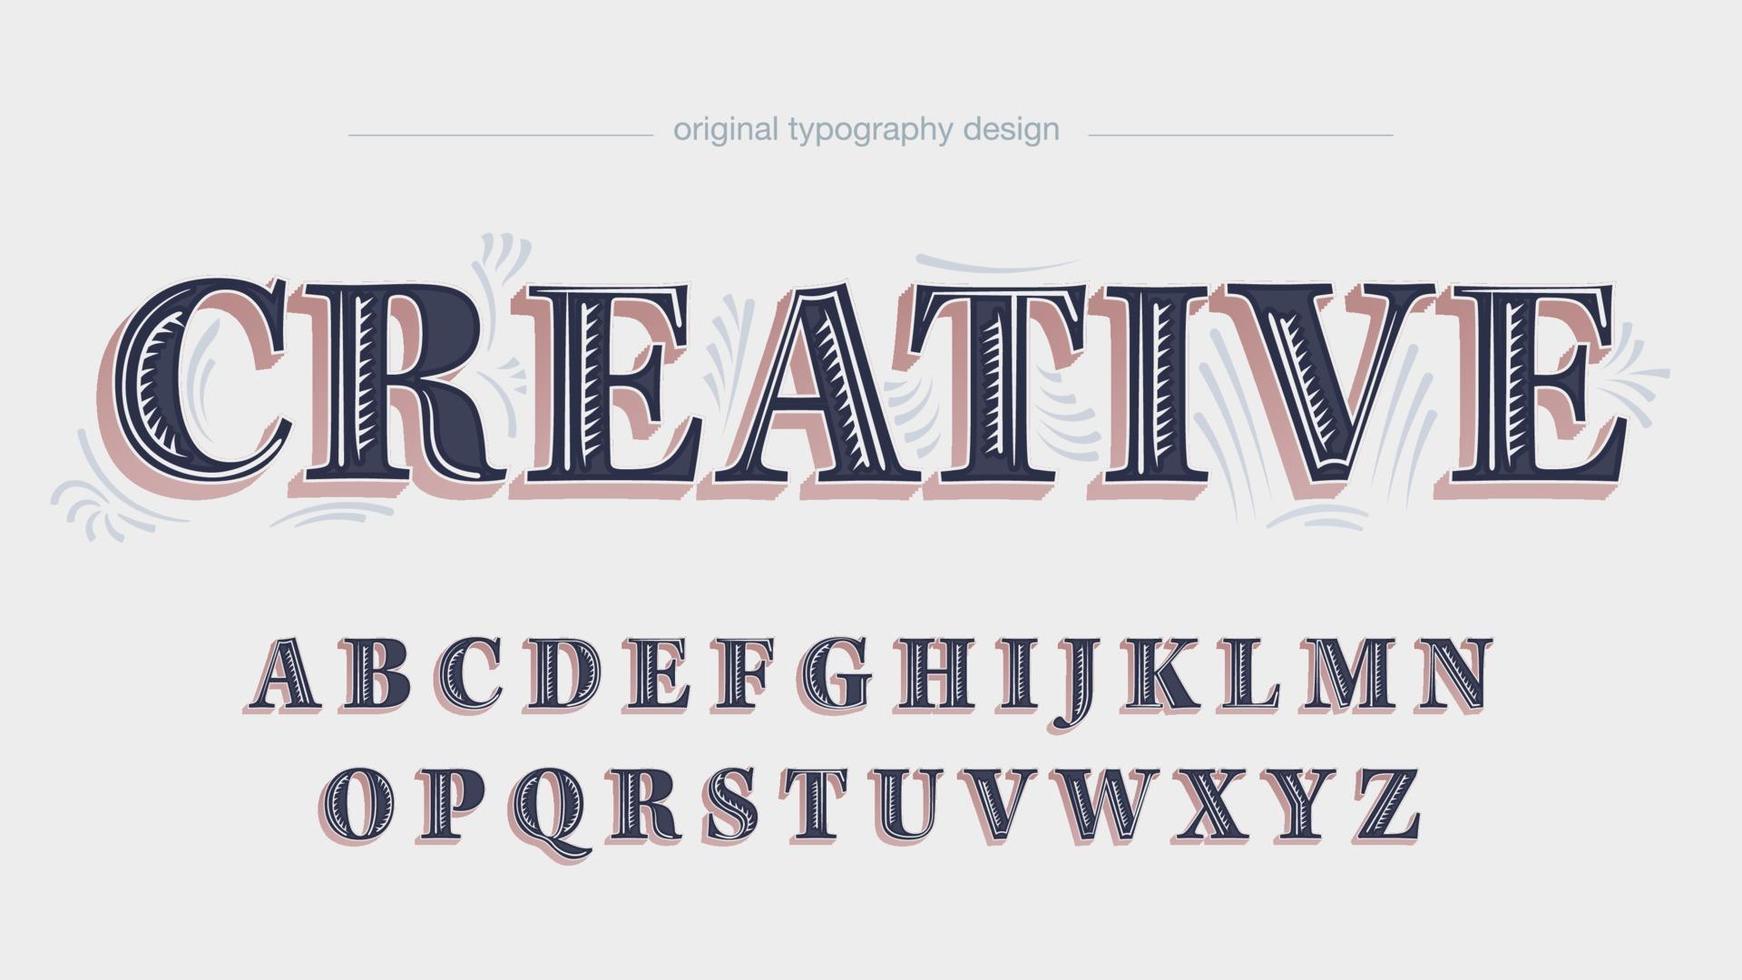 dekorativ 3d vintage typografi vektor